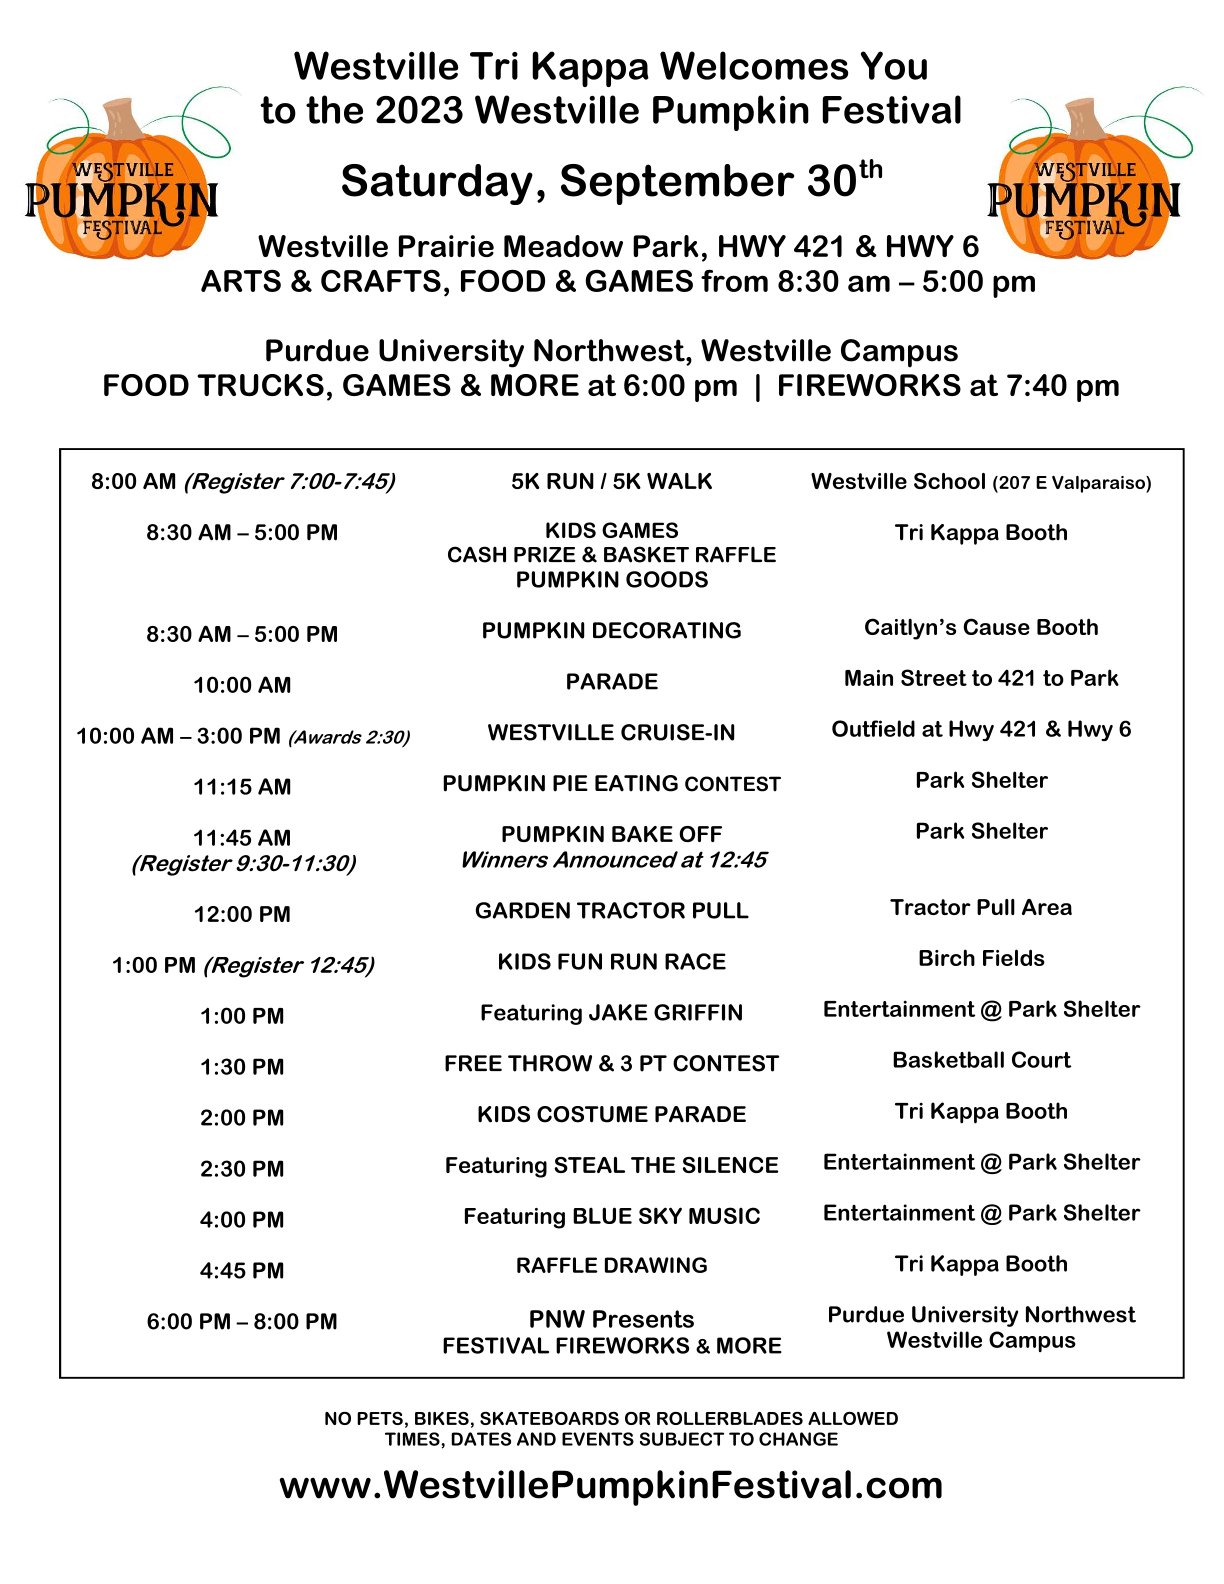 Westville Pumpkin Festival Saturday, Sep 30, 2023 from 830am to 8